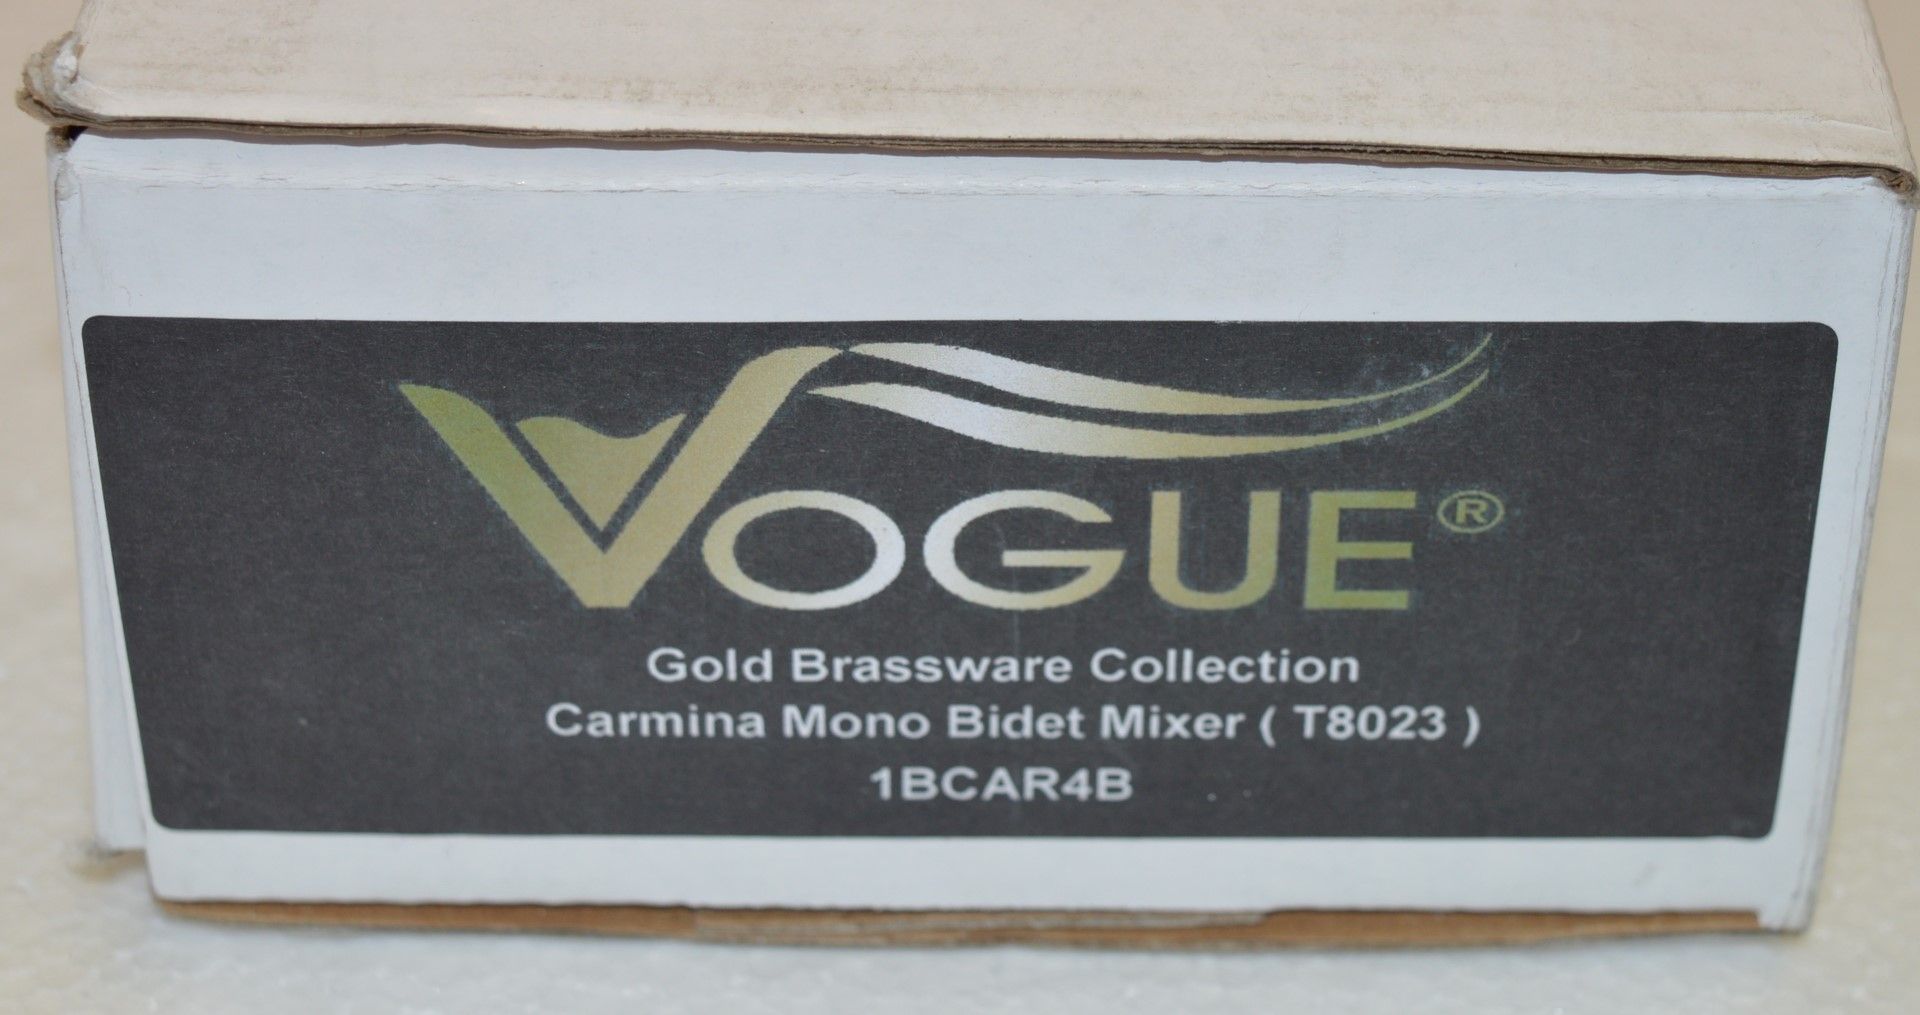 1 x Vogue Carmina Mono Bidet Mixer Tap - Vogue Bathrooms Gold Brassware Collection - High Quality - Image 3 of 6